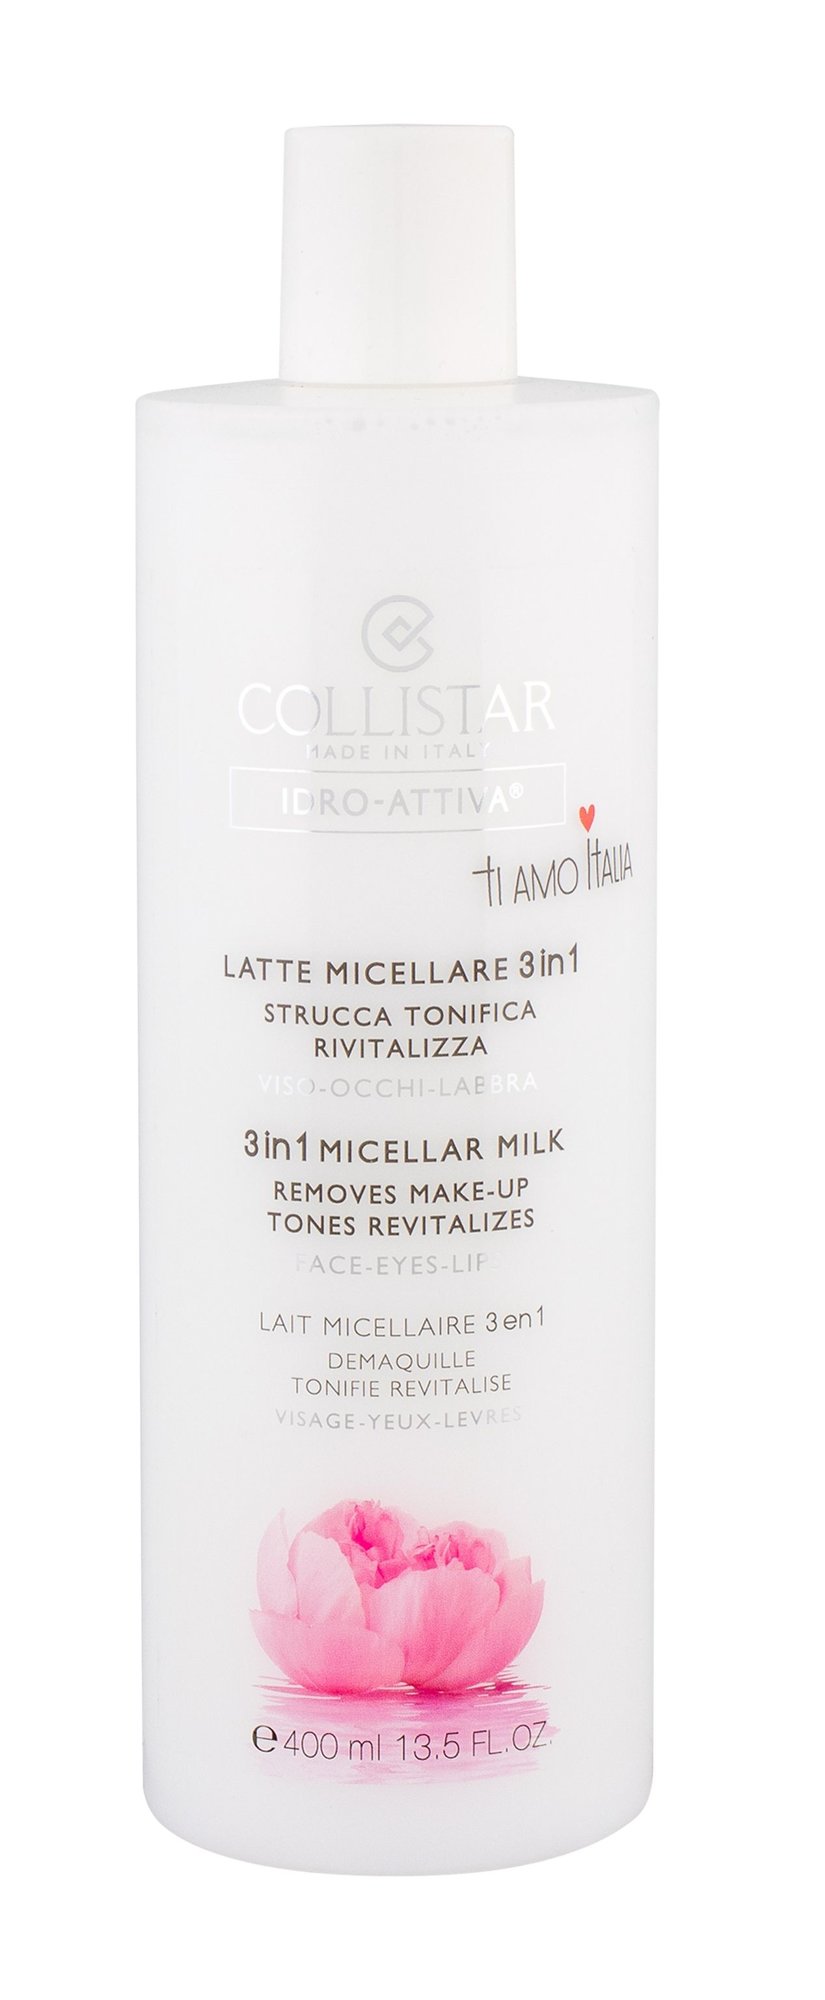 Collistar Idro-Attiva 3in1 Micellar Milk 400ml veido pienelis 